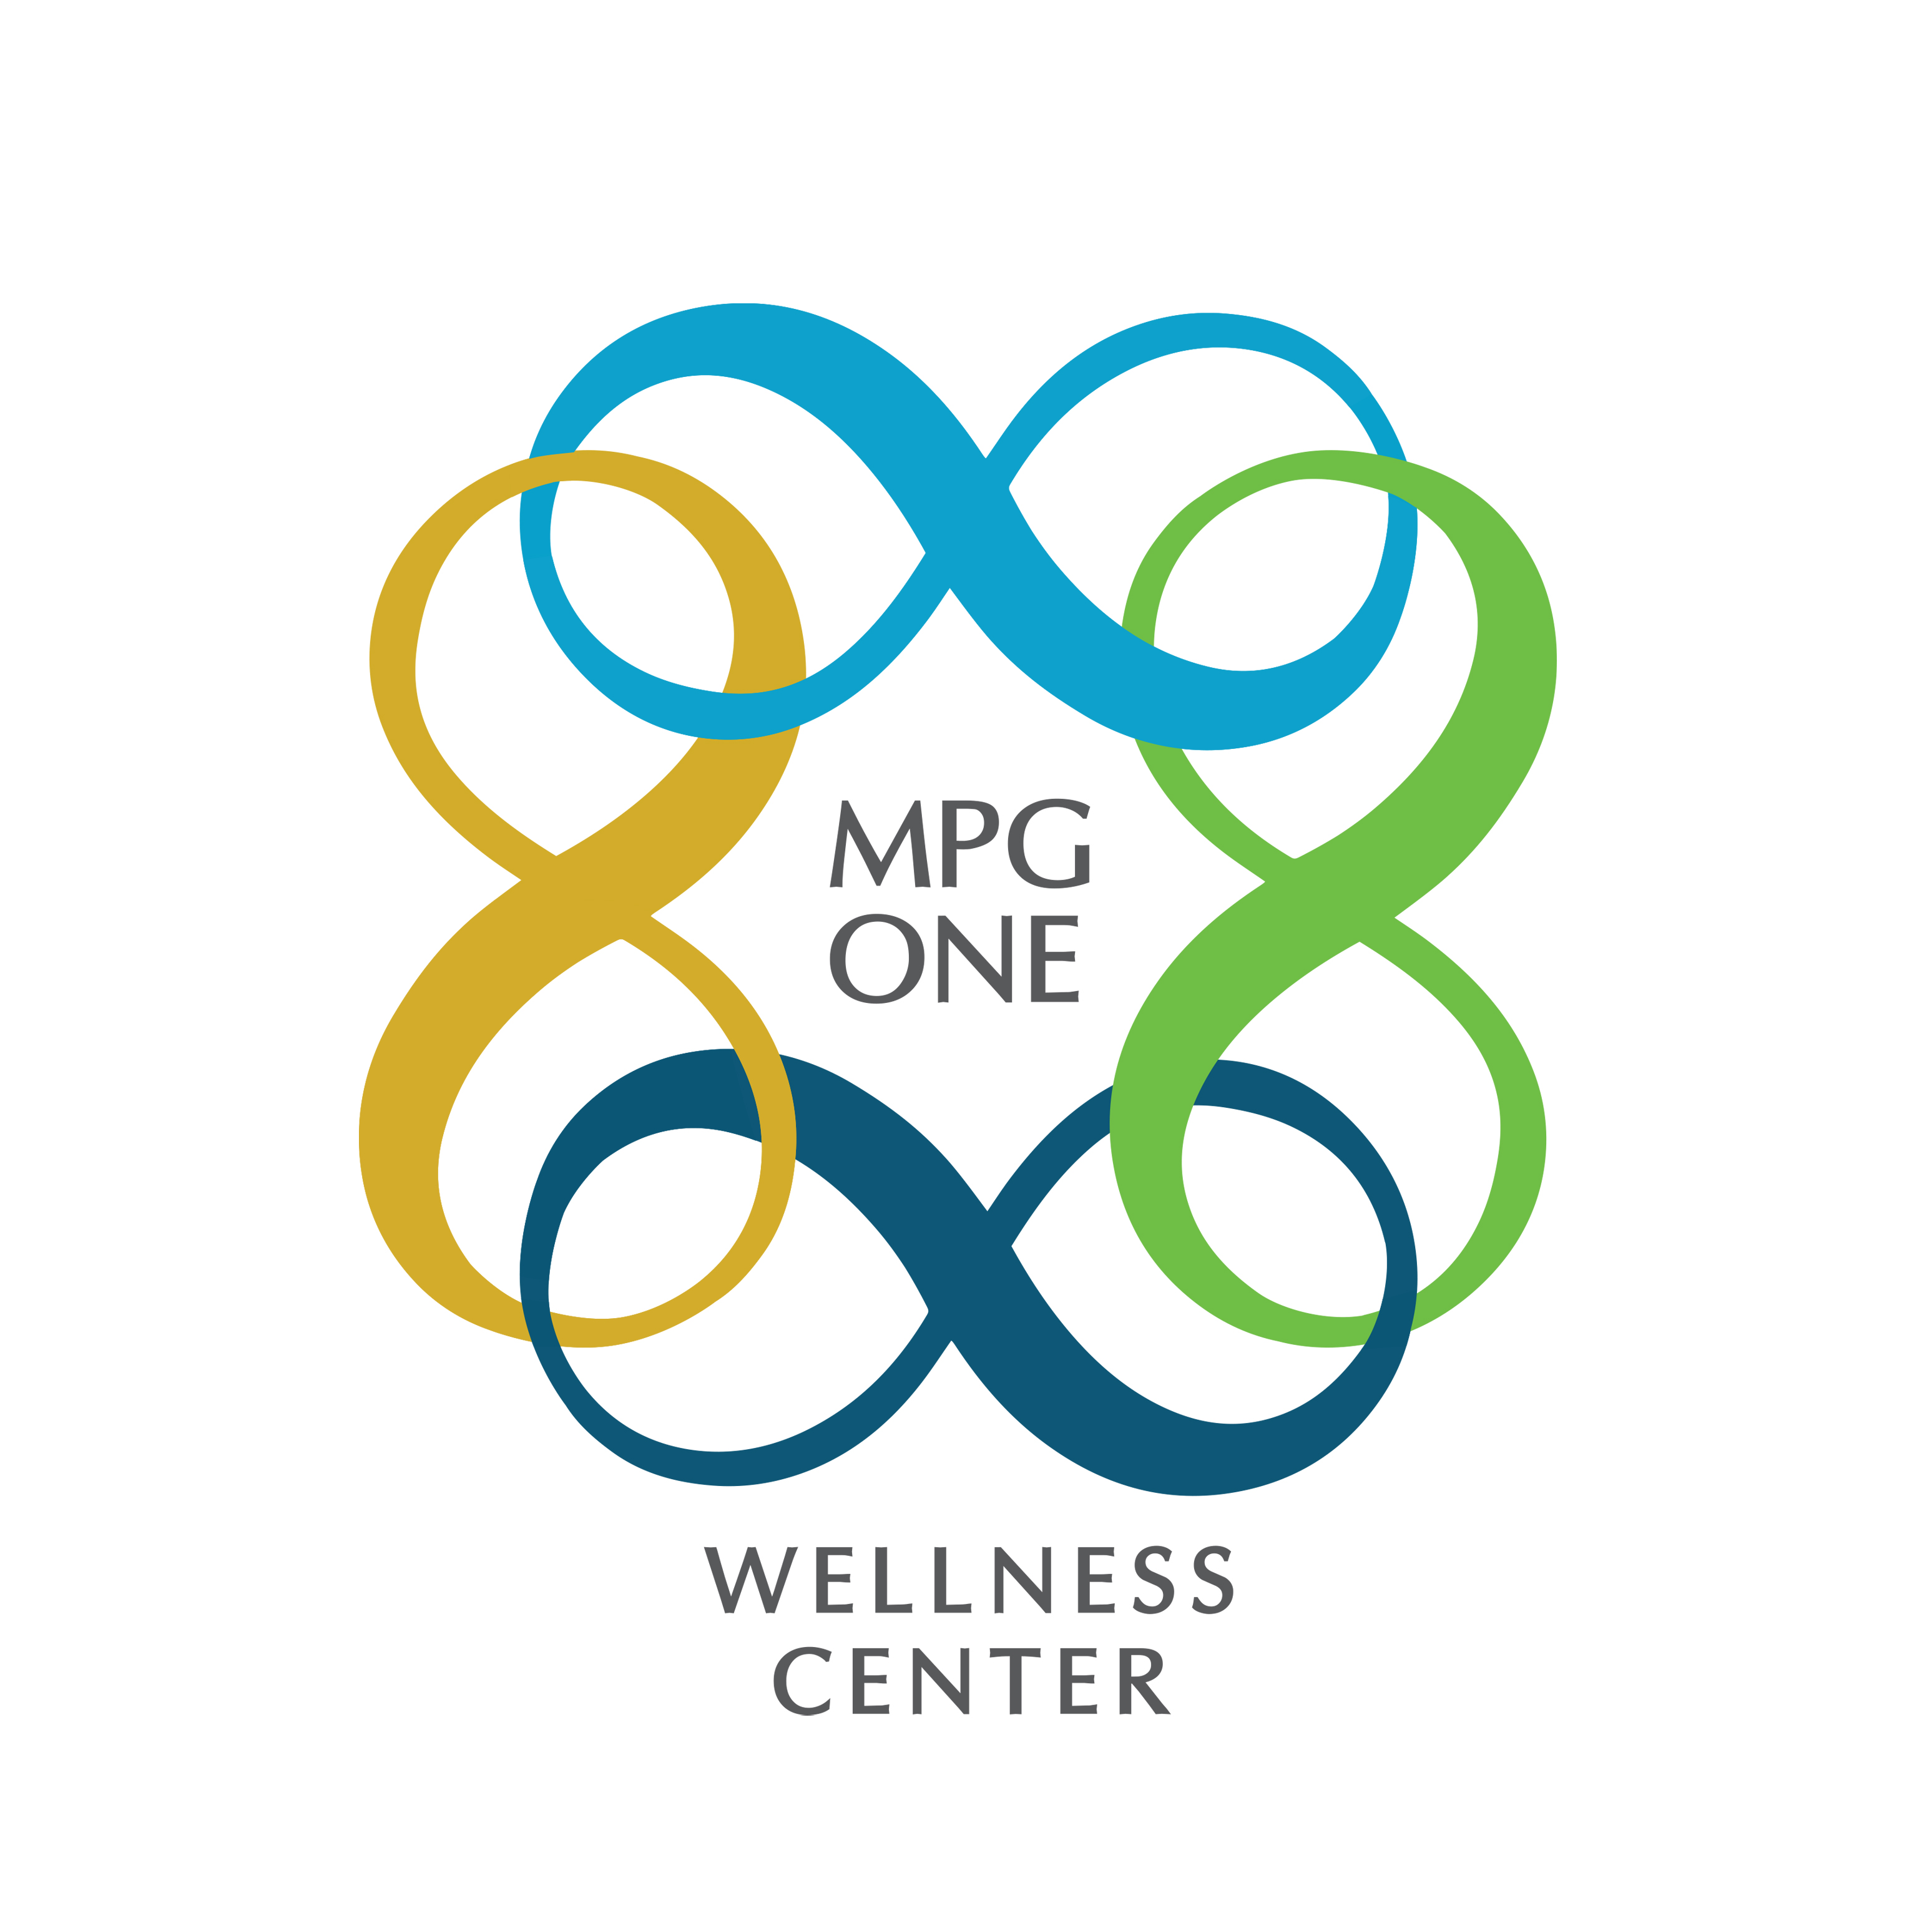 MPG ONE Wellness